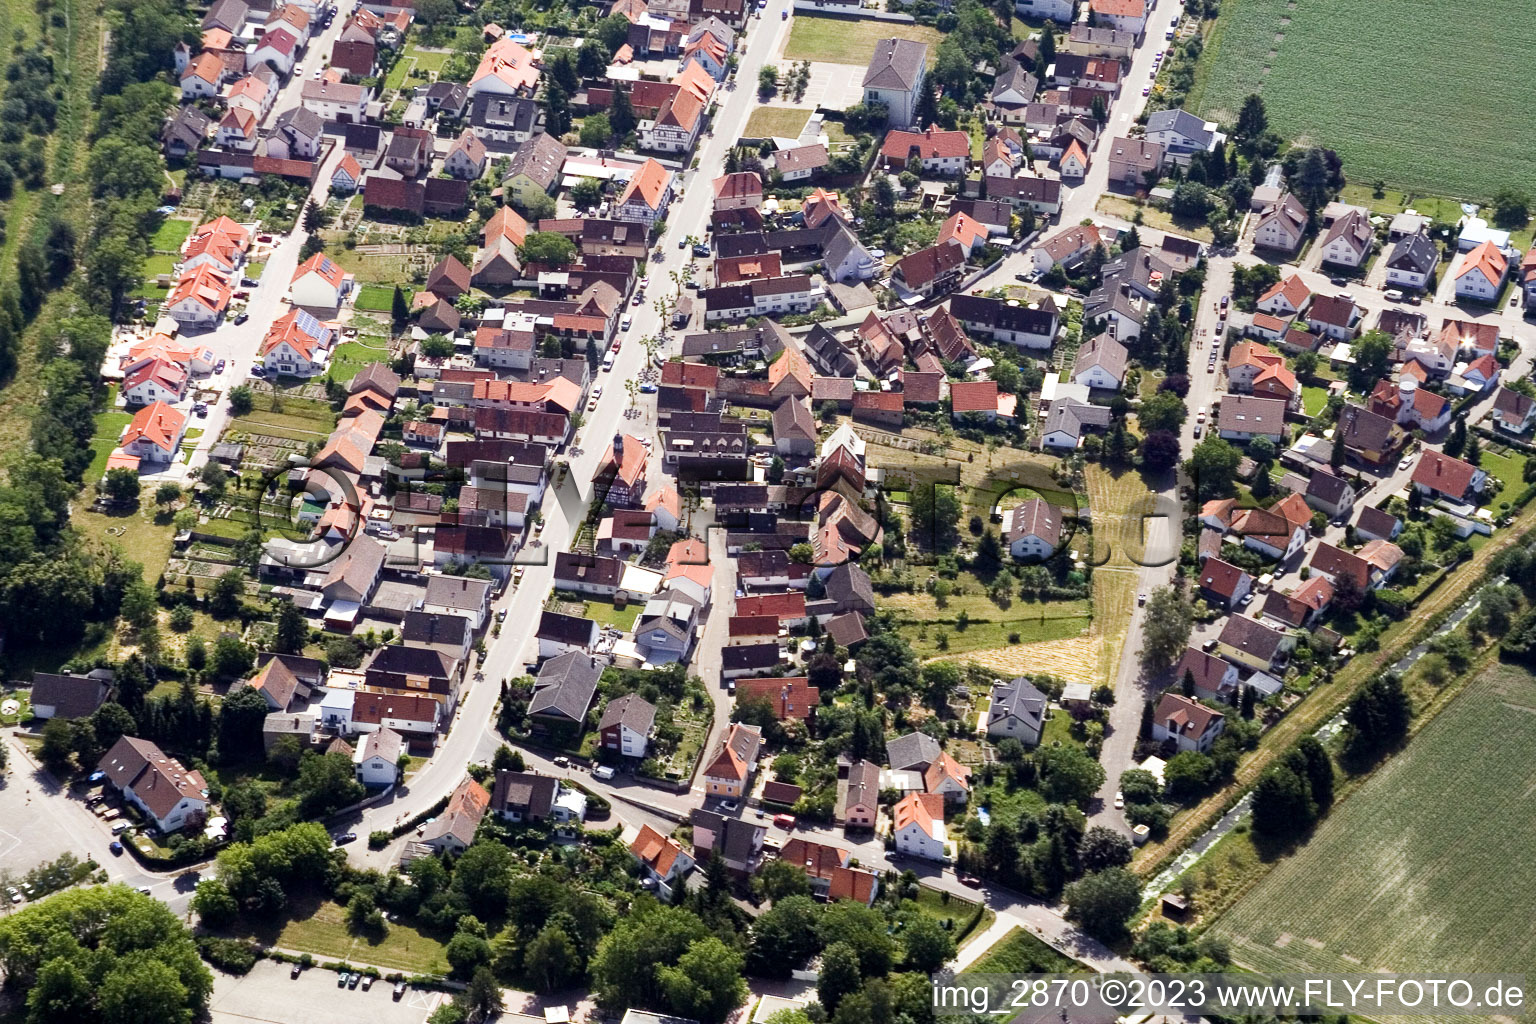 District Leopoldshafen in Eggenstein-Leopoldshafen in the state Baden-Wuerttemberg, Germany seen from a drone